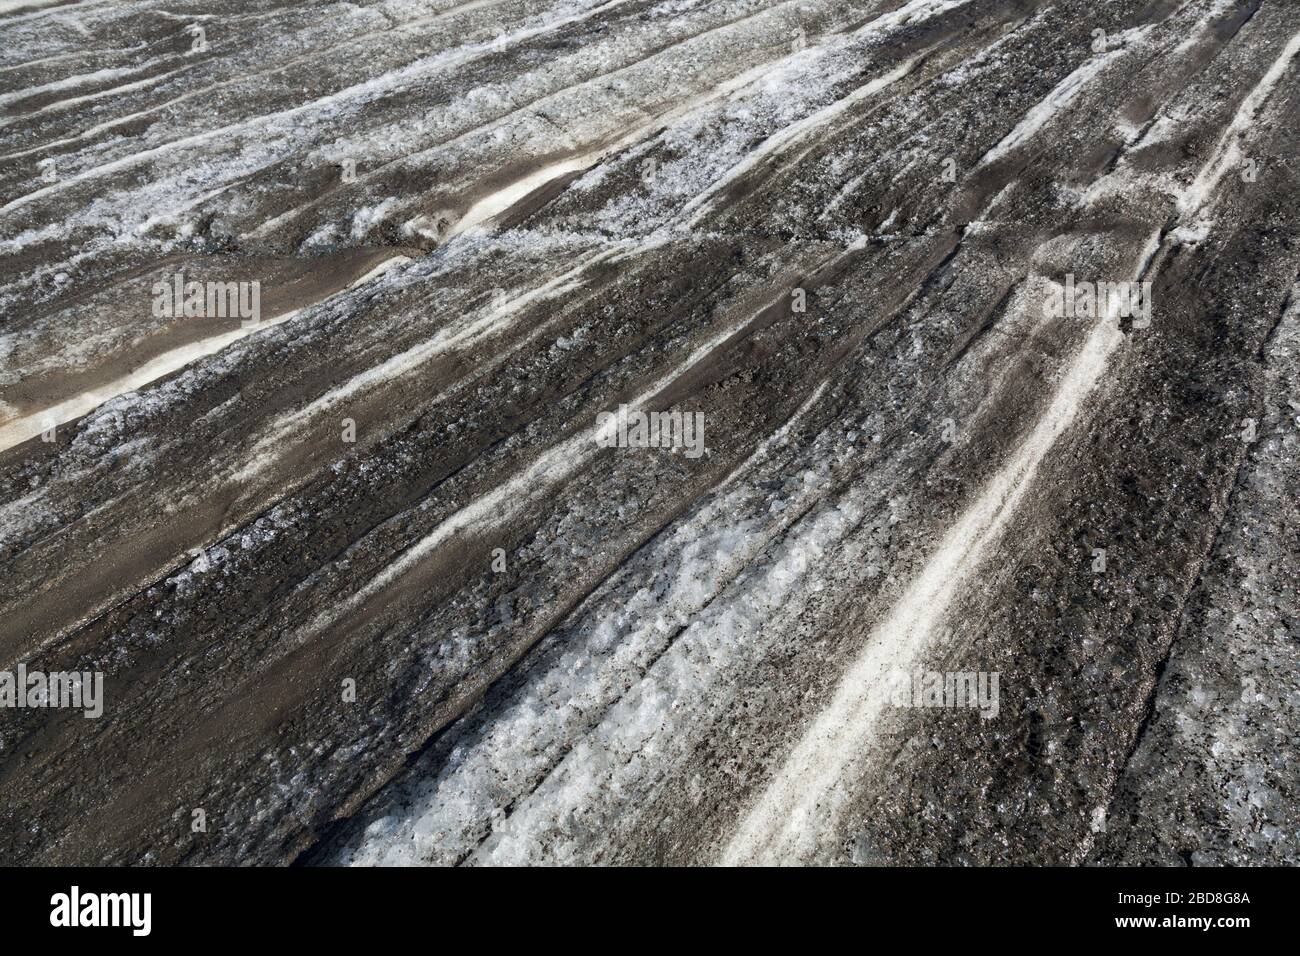 Annual layers of snow accumulation and melt exposed on Snowbird Glacier, Talkeetna Mountains, Alaska. Stock Photo